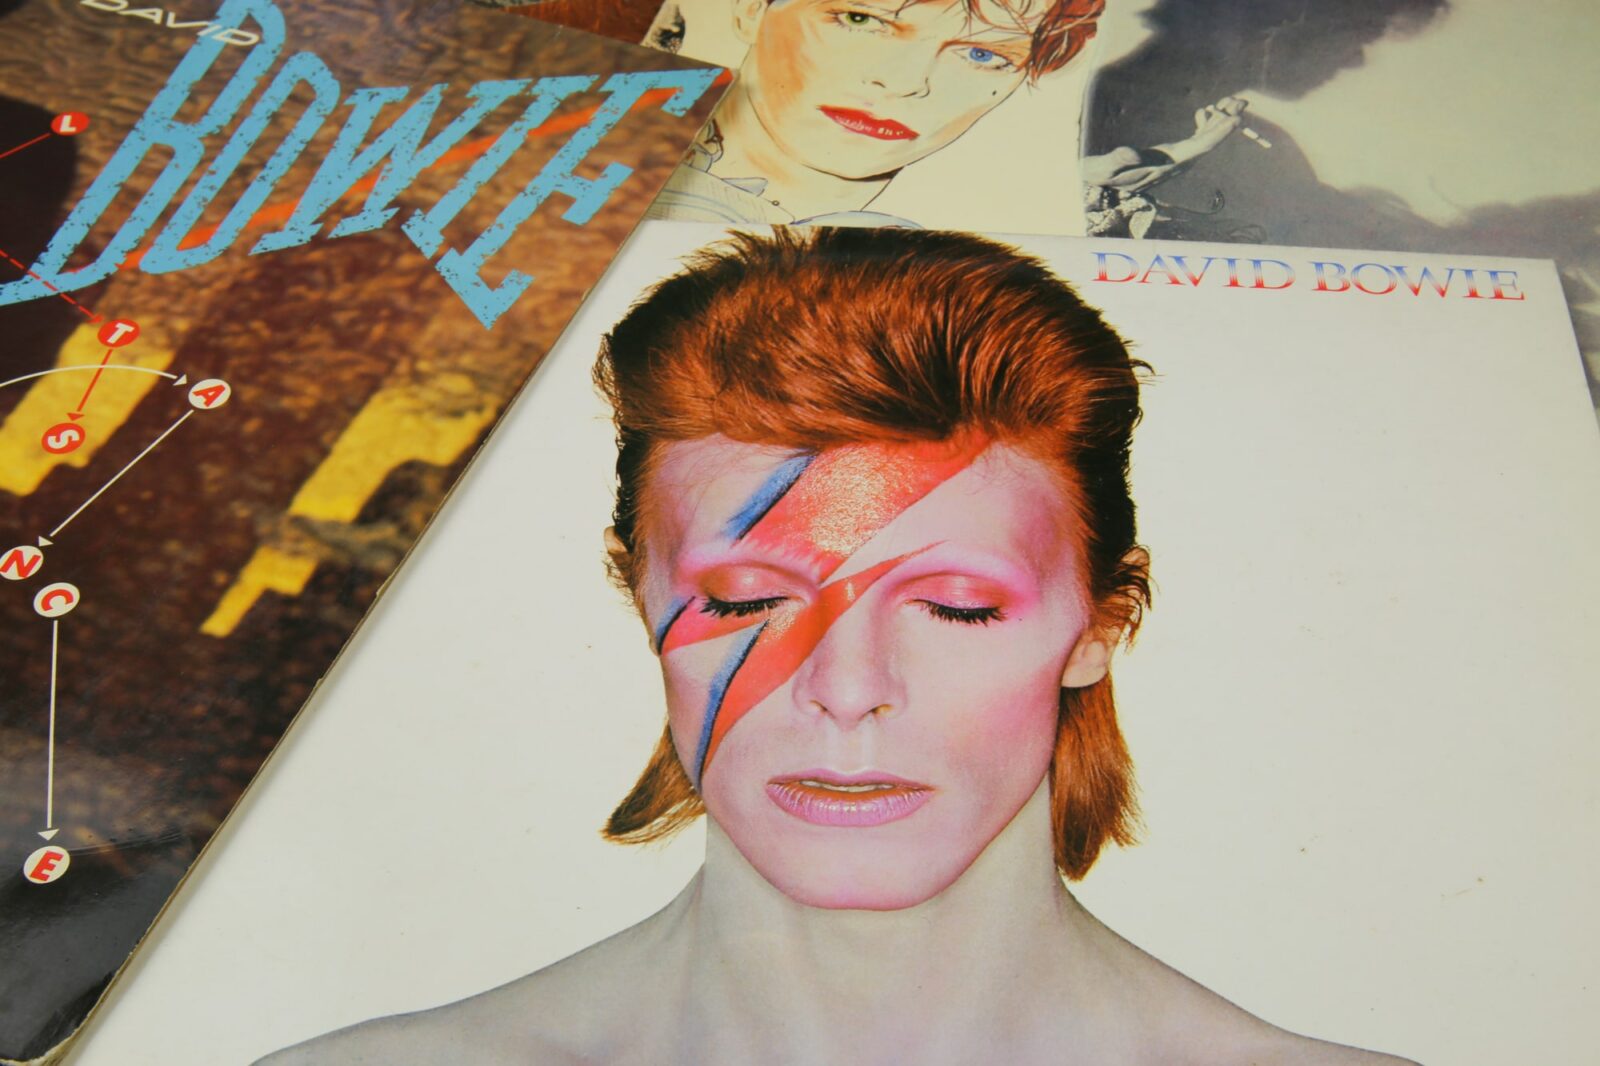 Adobe lancia nuovi strumenti digitali per i creators ispirati a David Bowie thumbnail